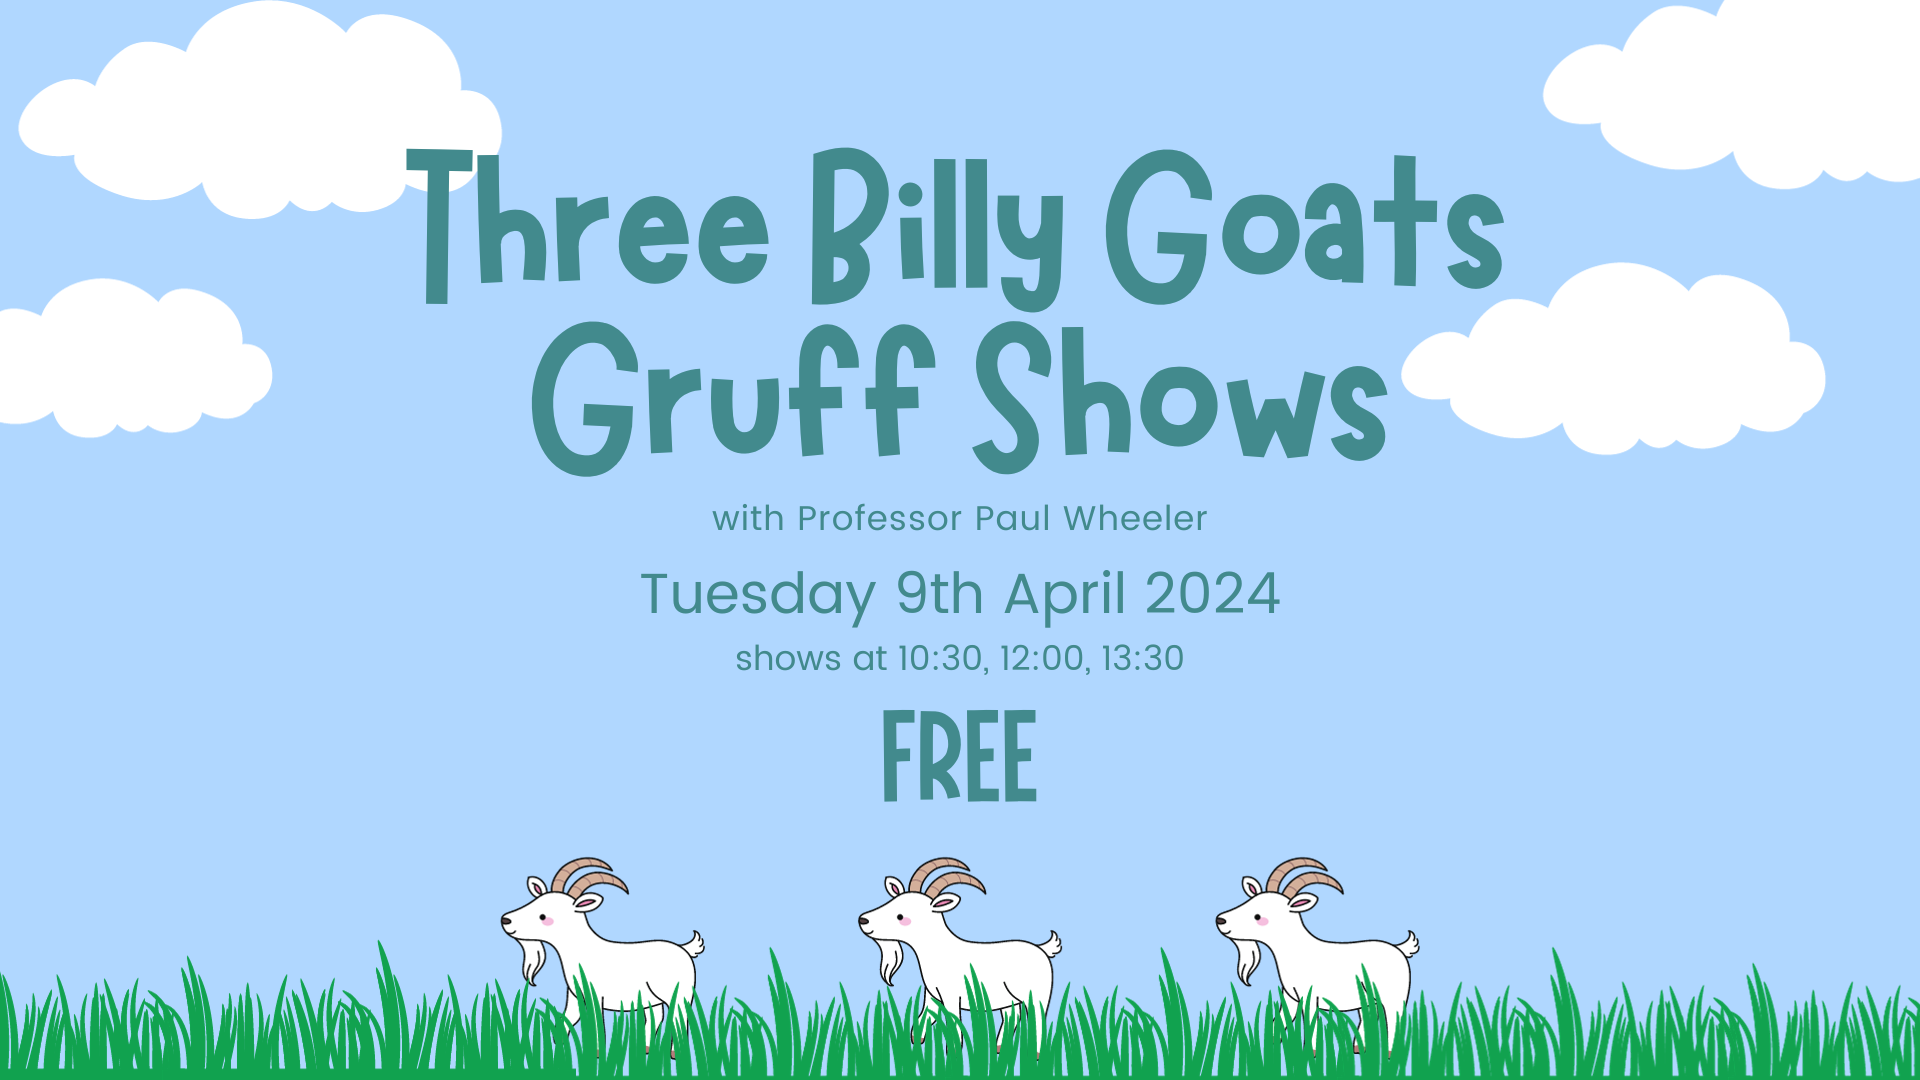 090424 Three Billy Goats Gruff Shows WEBSITE